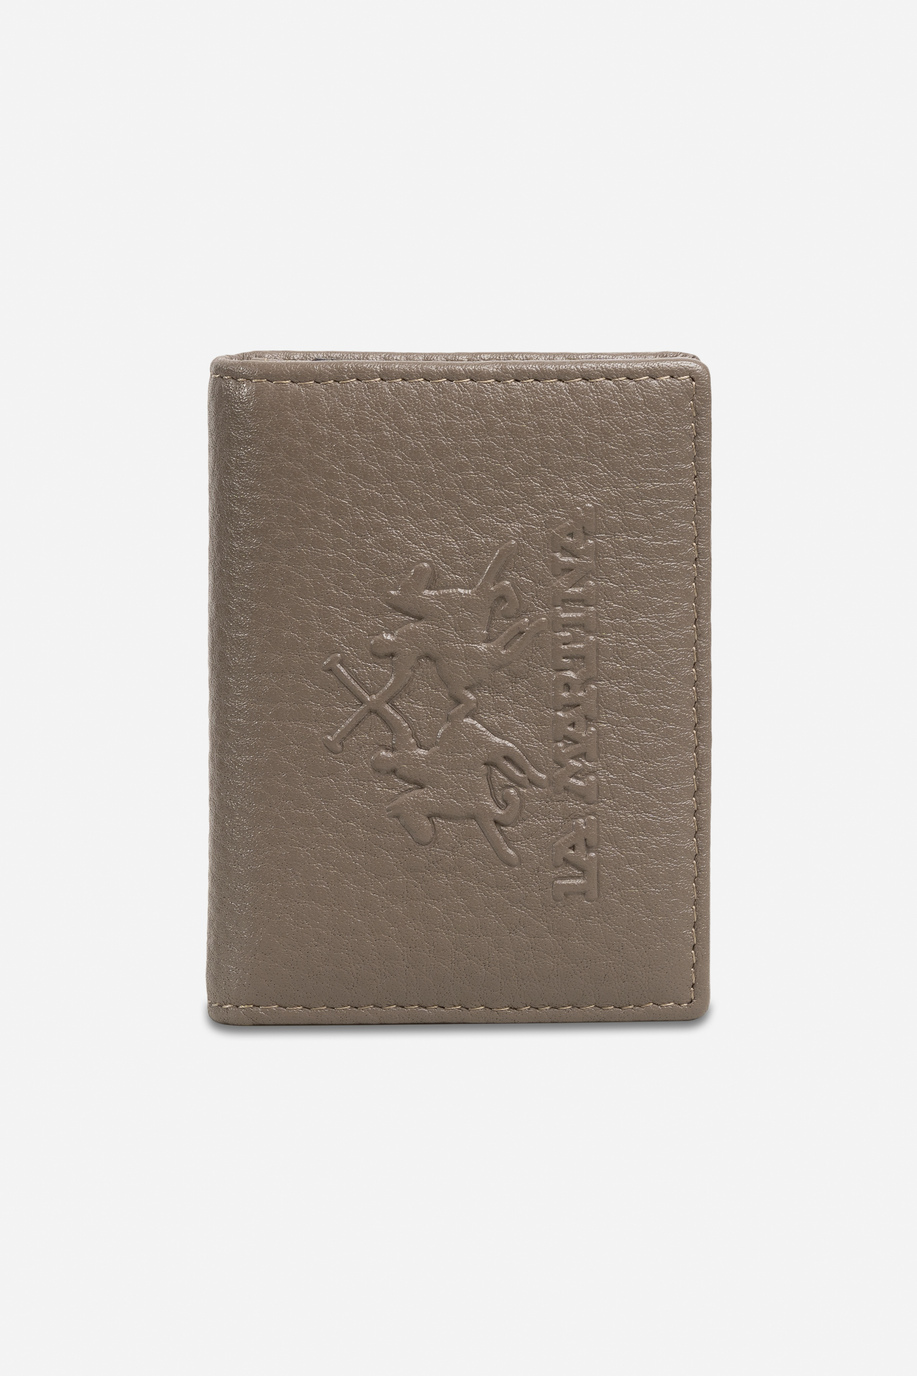 Leather wallet in solid colour - test | La Martina - Official Online Shop